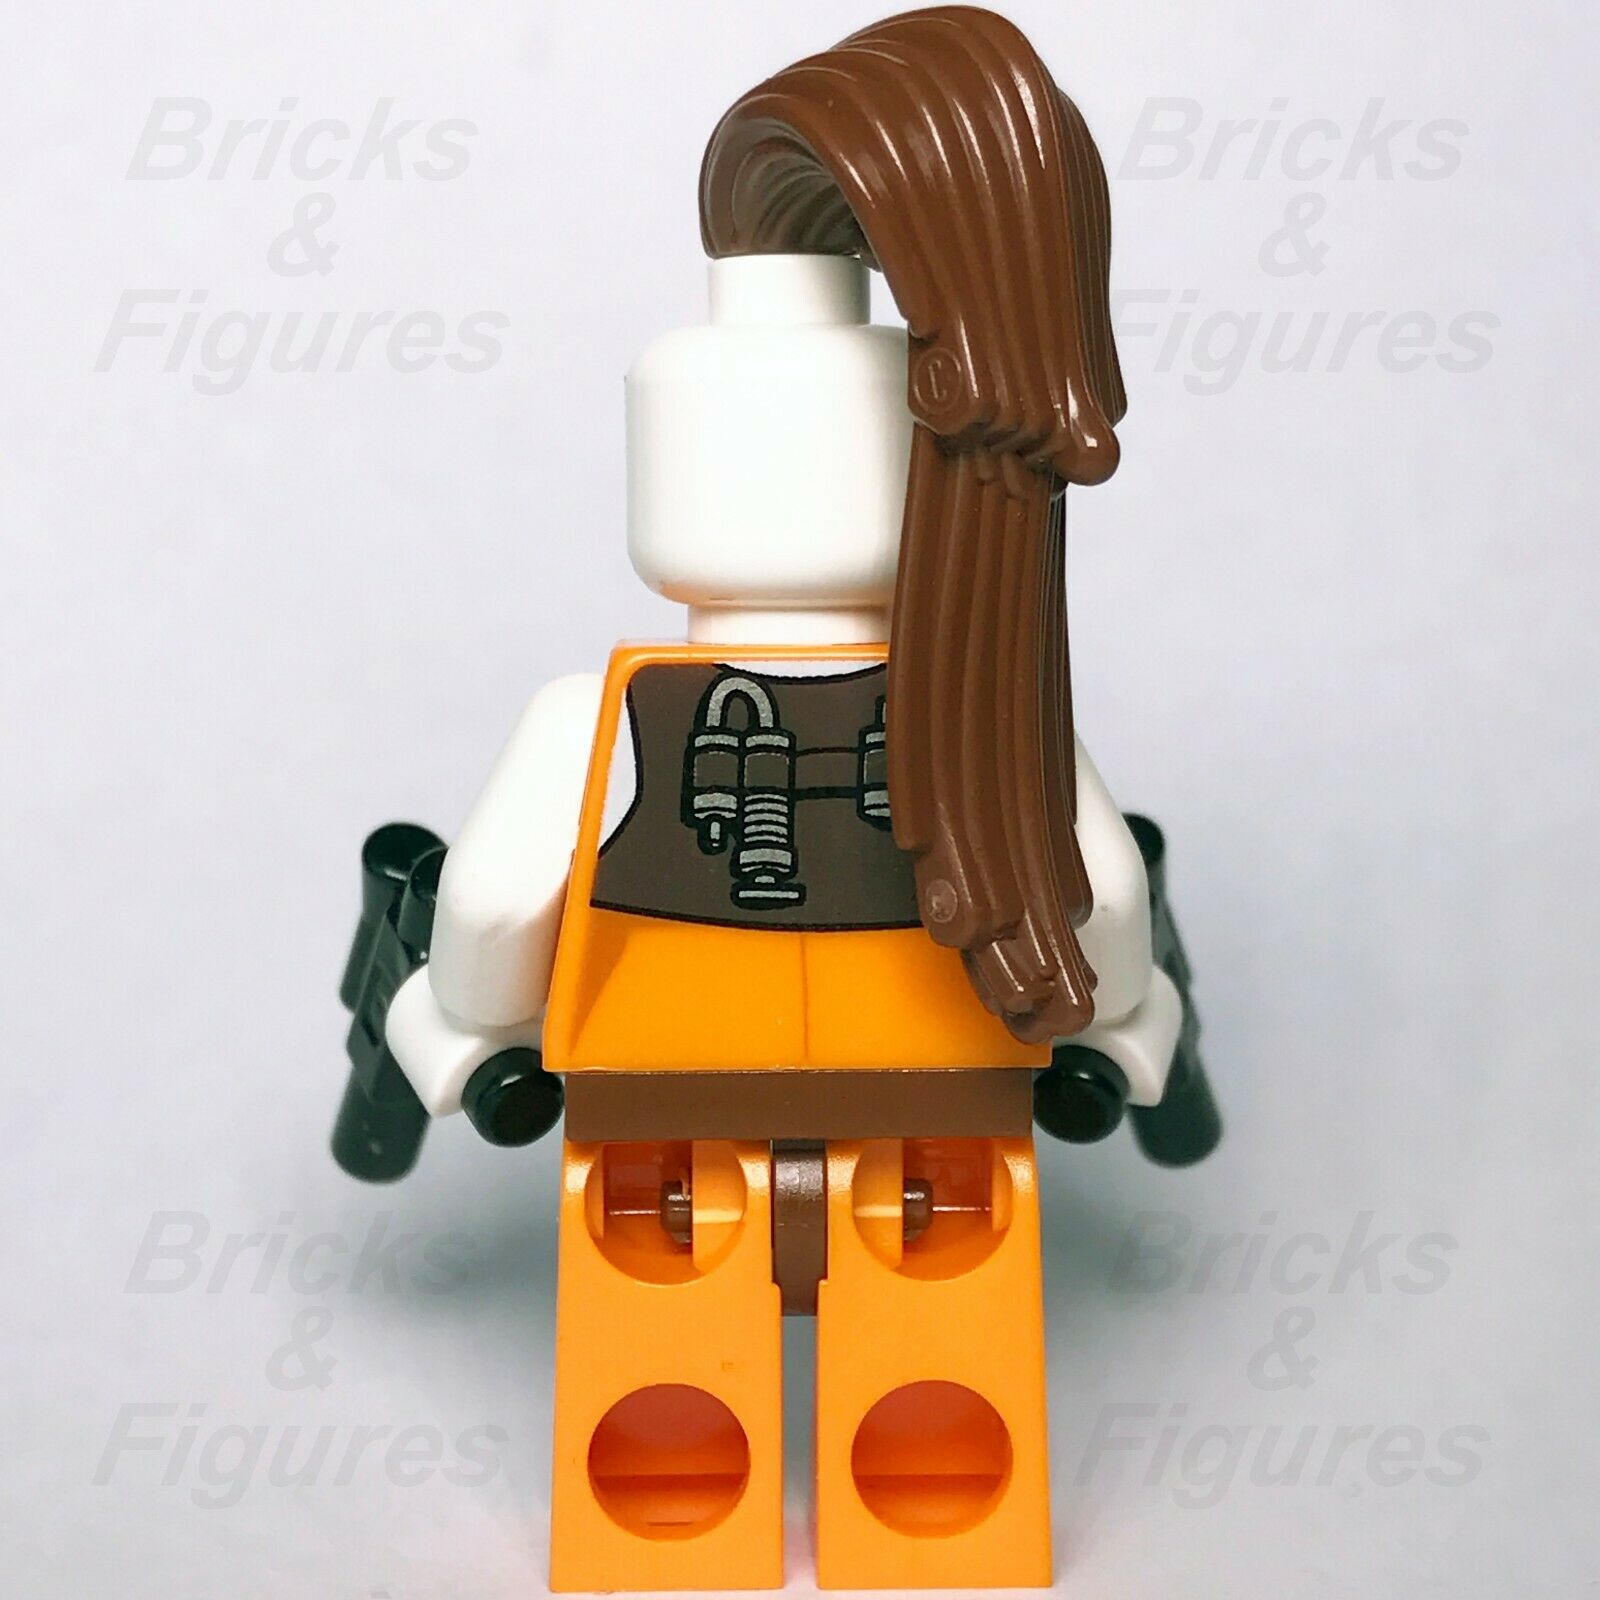 New Star Wars LEGO Aurra Sing Palliduvan Bounty Jedi Hunter Minifigure 7930 - Bricks & Figures